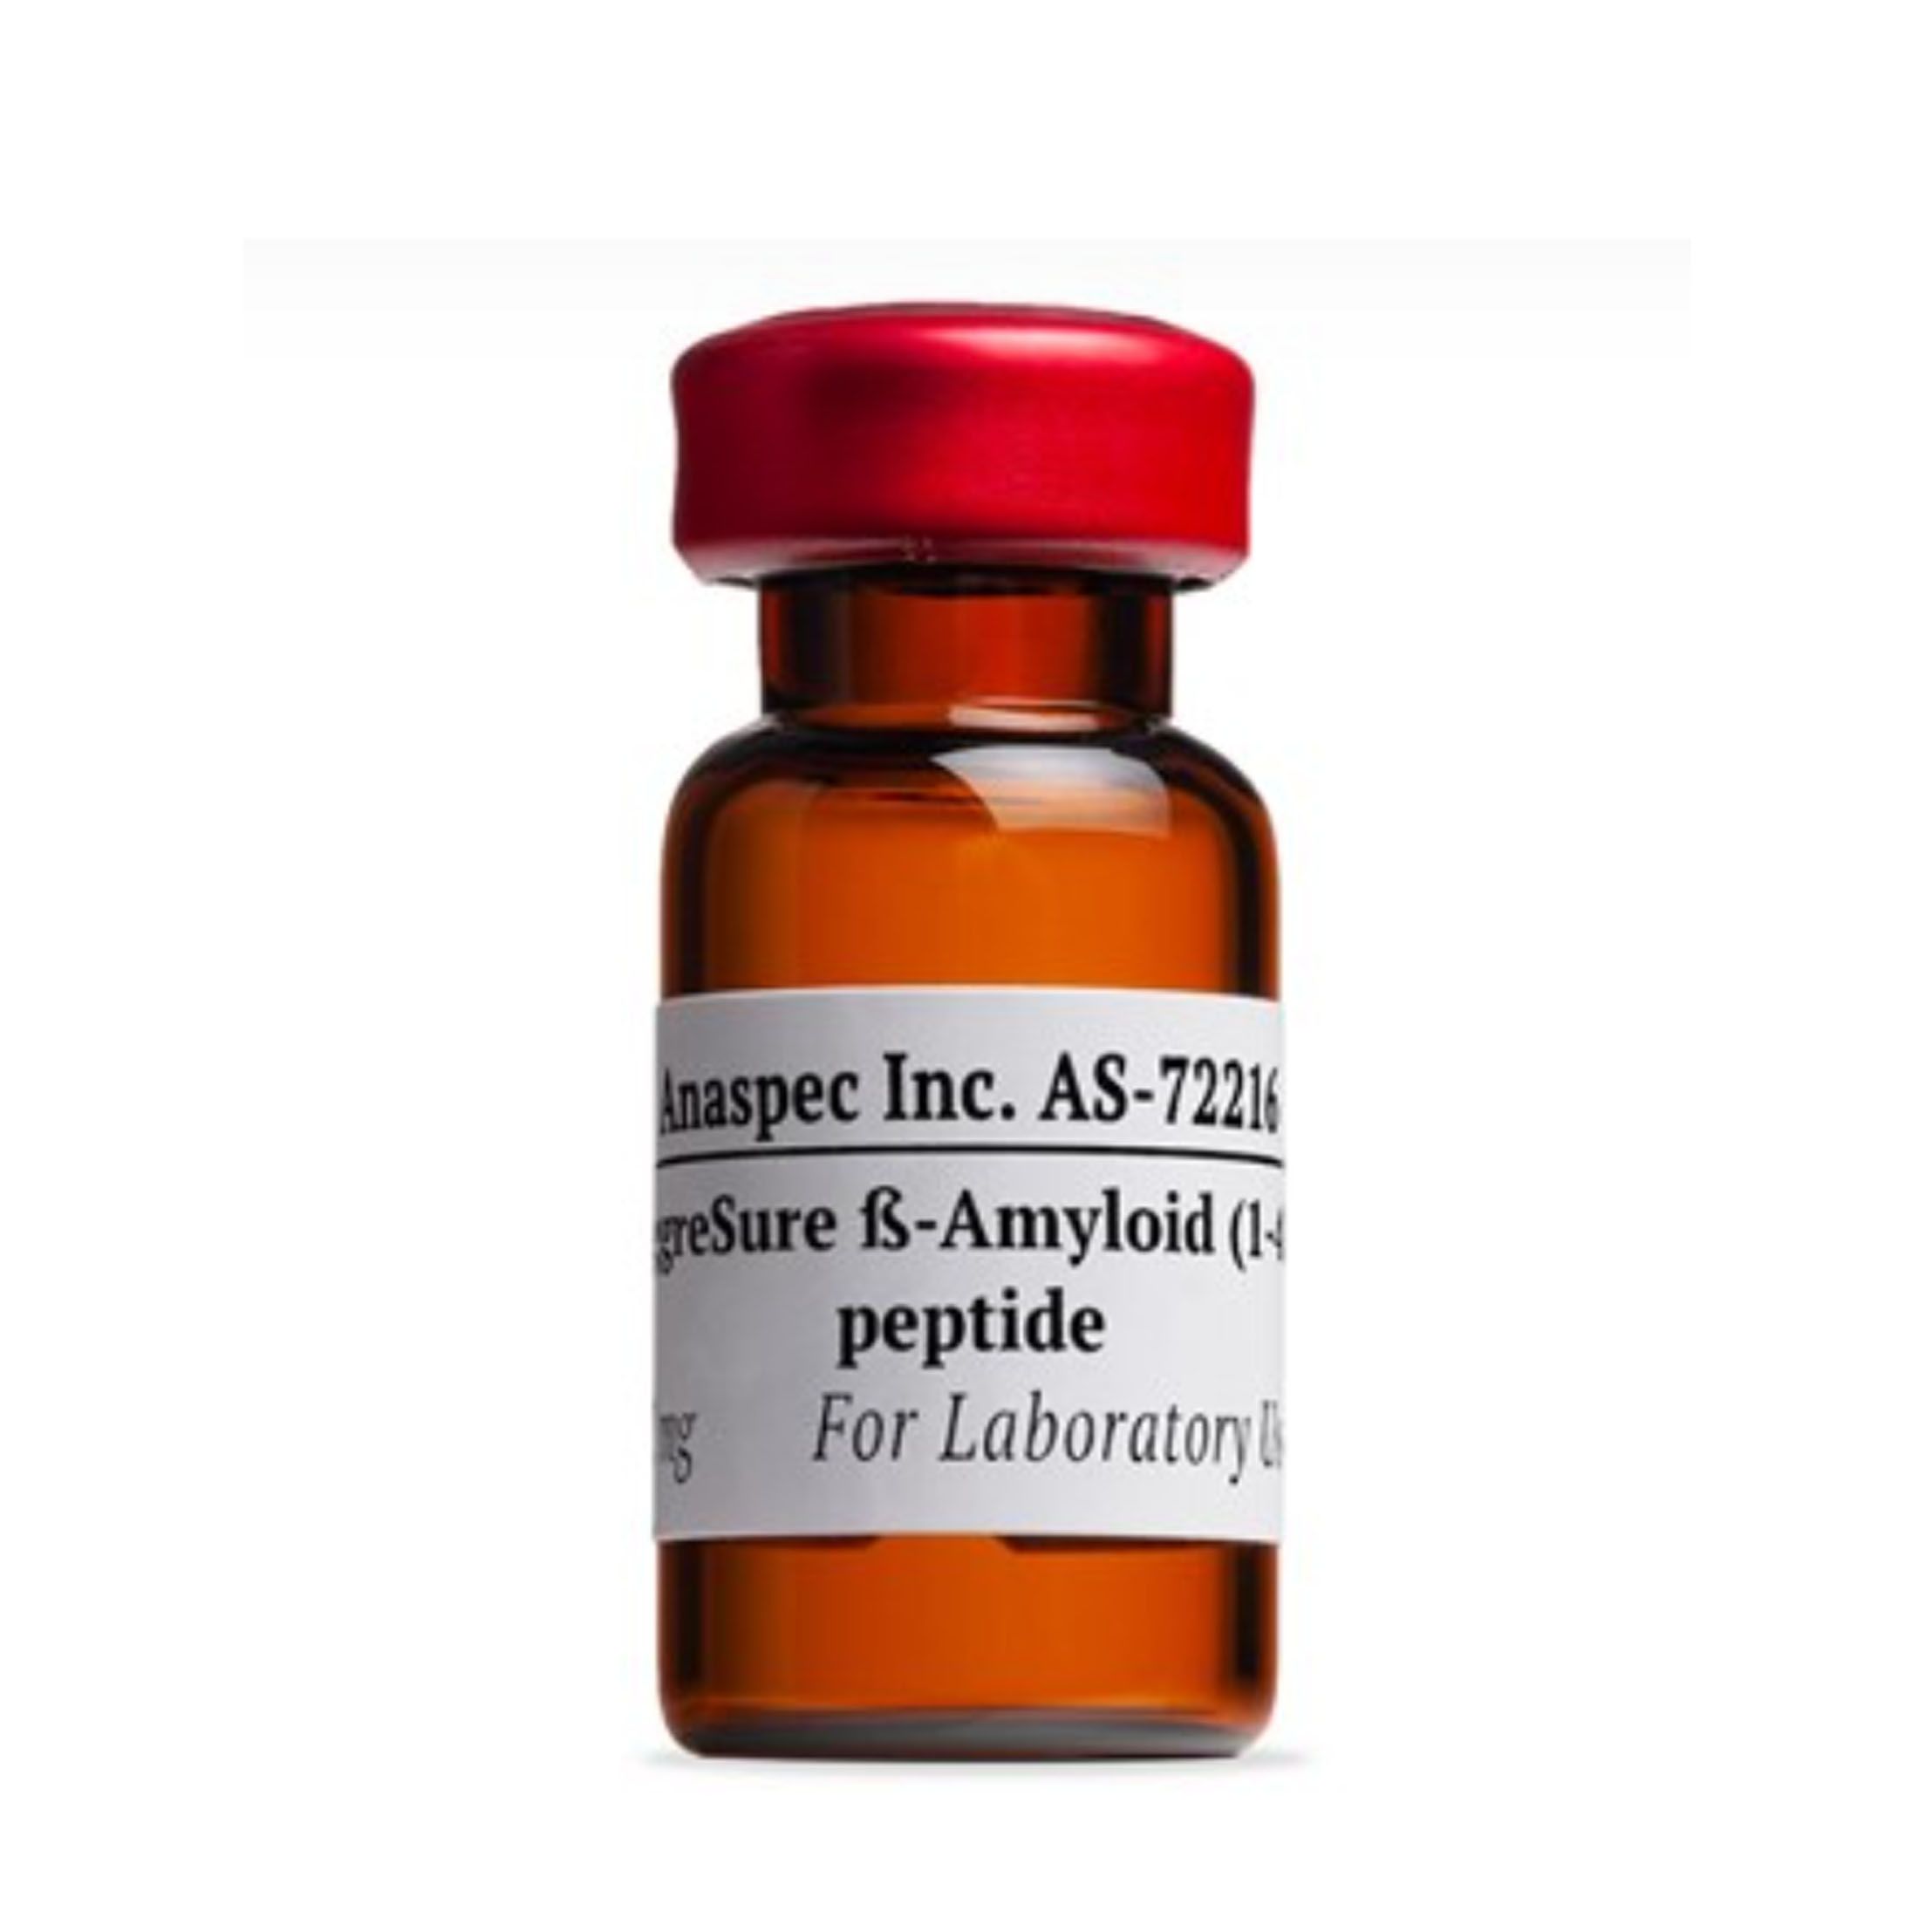 AnaSpecAS-72216侵袭性ß-淀粉样蛋白（1-42），人类-0.25毫克，AggreSure ß-Amyloid (1-42), human - 0.25 mg